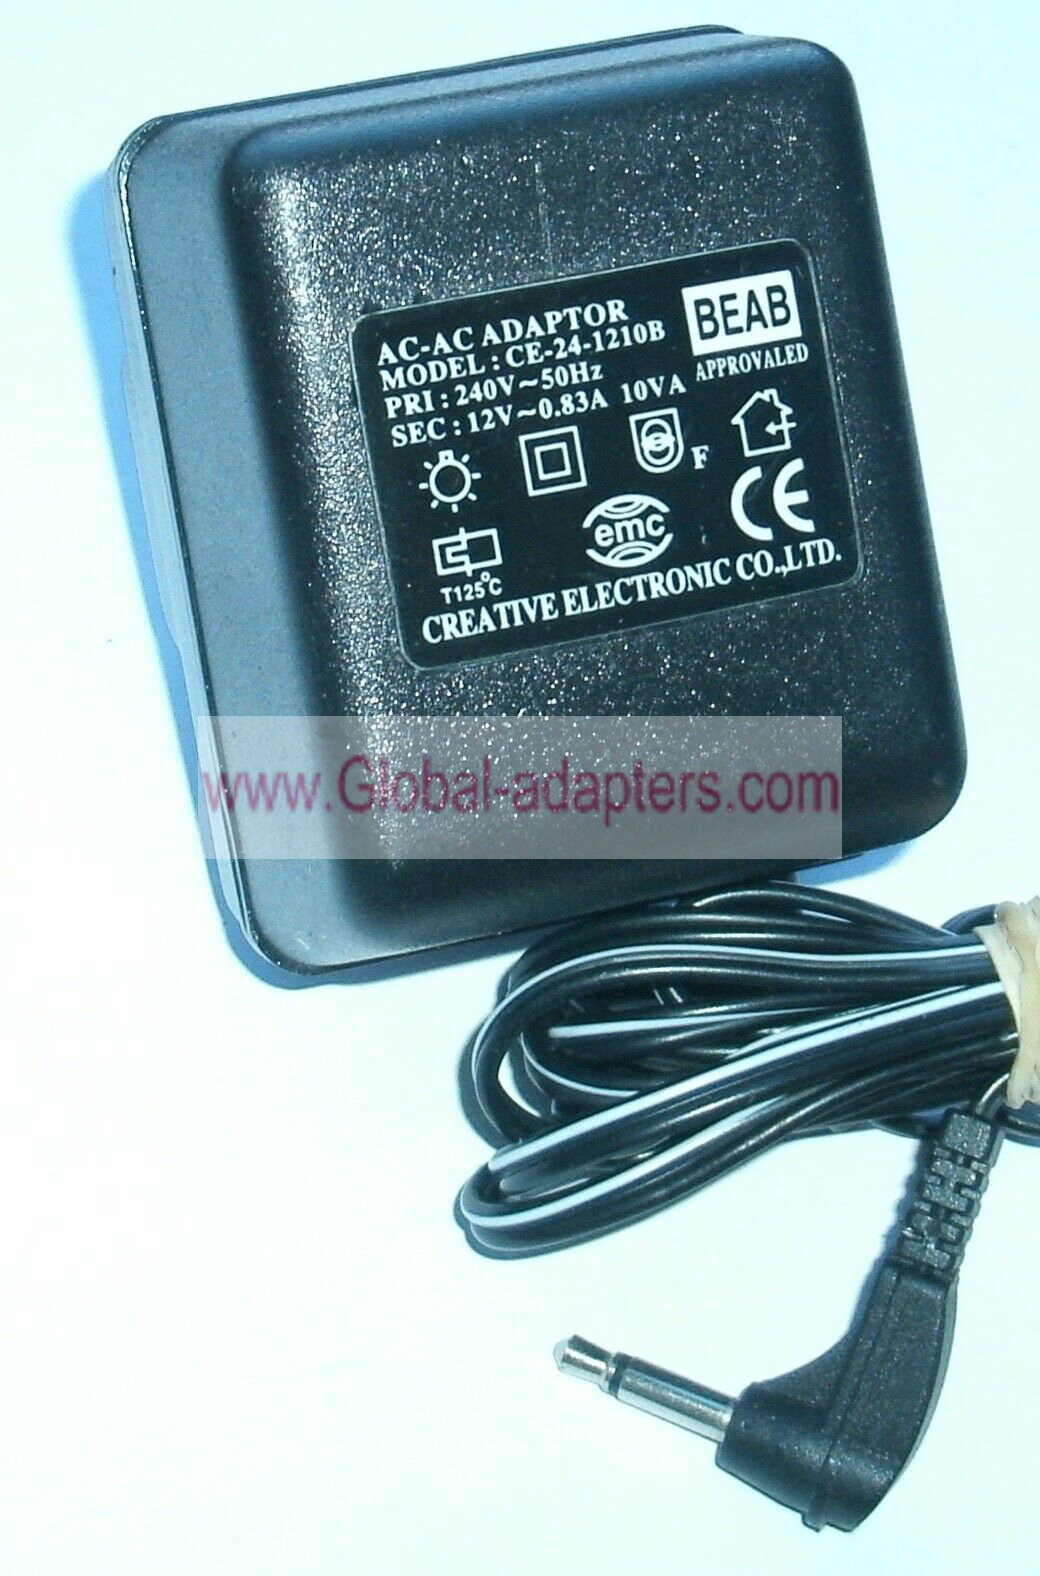 New Creative 12V 0.83A 10VA AC-AC Adaptor CE-24-1210B power supply Charger - Click Image to Close